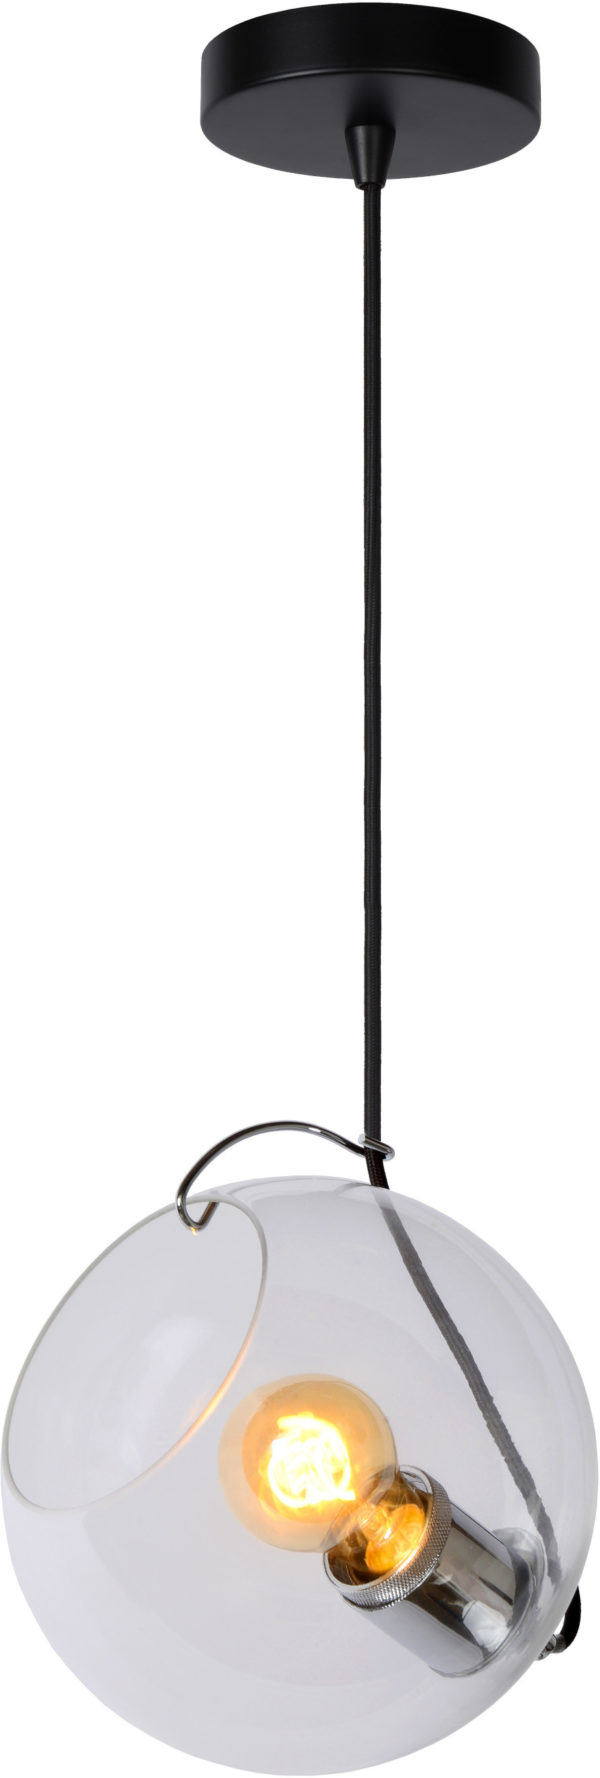 Jazzlynn hanglamp Ã¸ 20 cm 1xe27 - zwart Lucide Hanglamp 25405/20/60